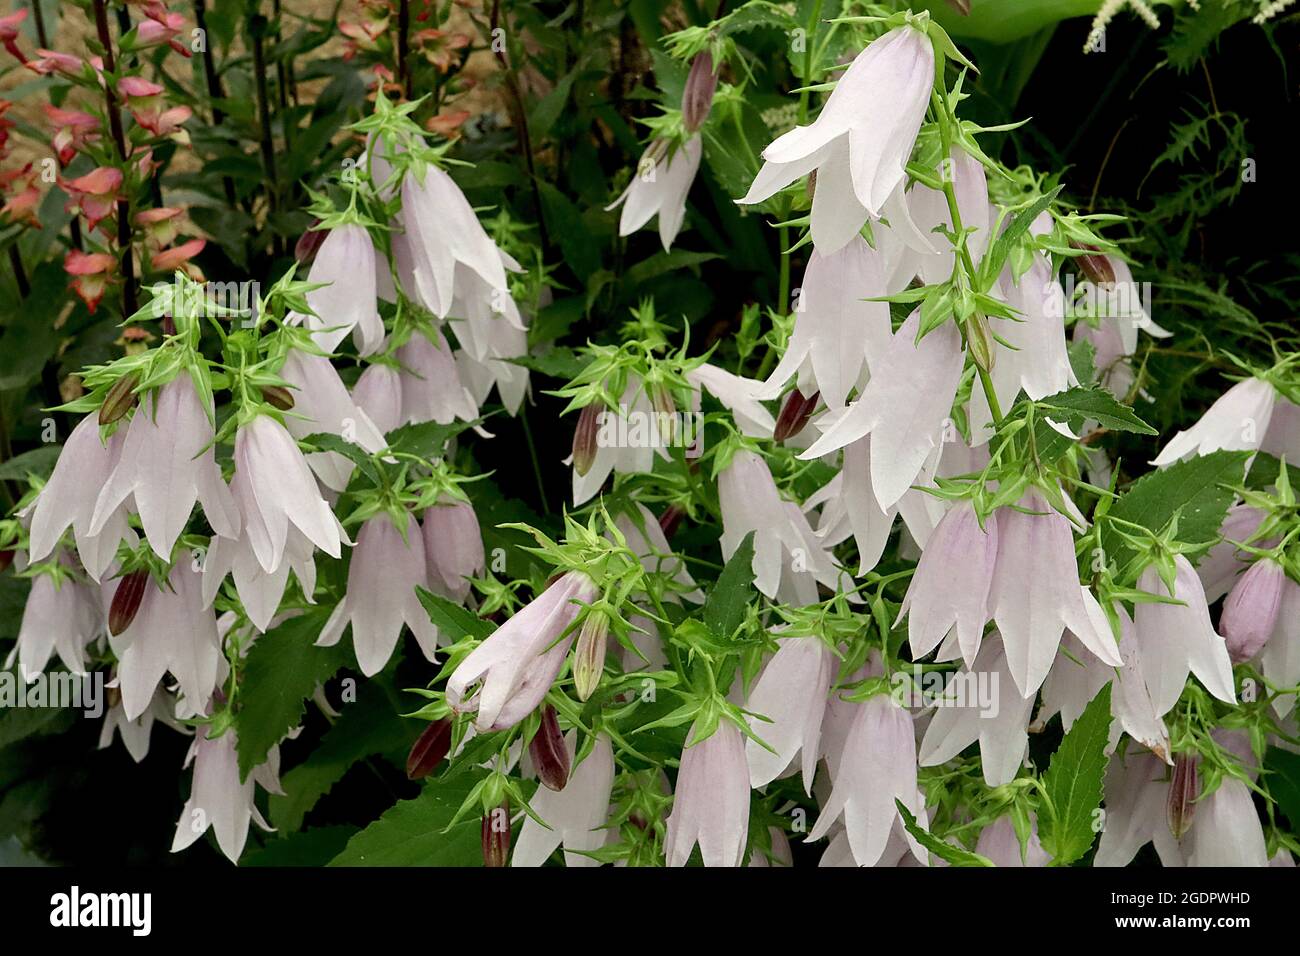 Glockenblume Glockenblume Glockenblume Glockenblume - hängende glockenförmige weiße Blüten, violett gefärbt, Juli, England, ‘ Stockfoto